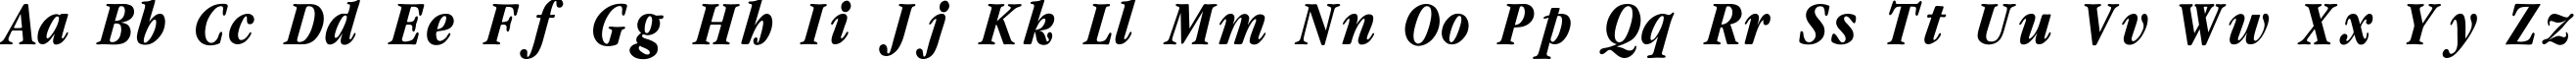 Пример написания английского алфавита шрифтом Garamondcond-Bold-Italic